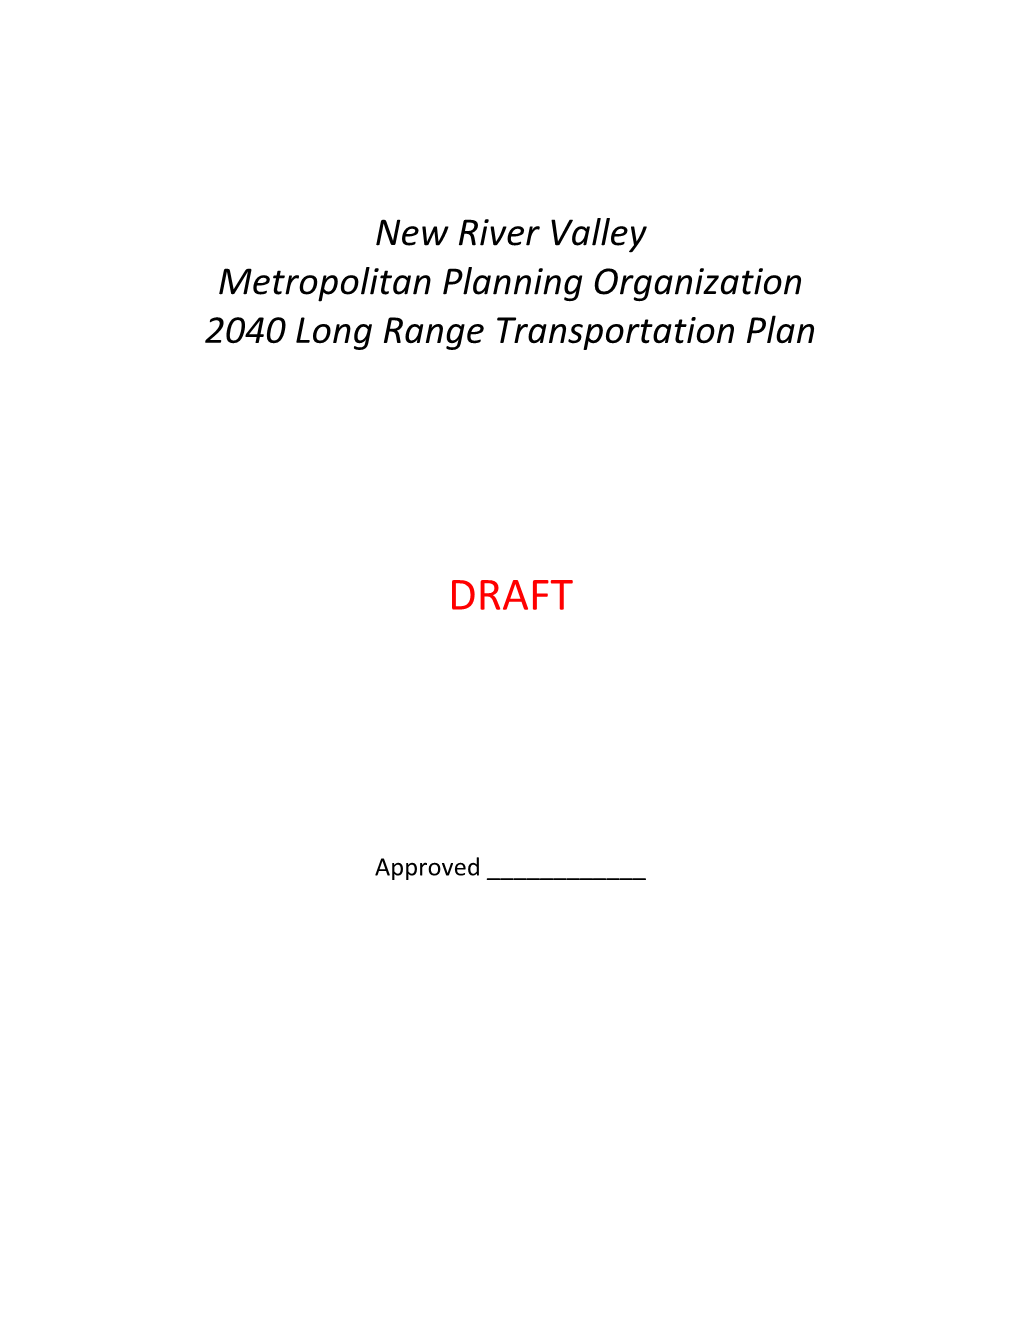 New River Valley Metropolitan Planning Organization 2040 Long Range Transportation Plan